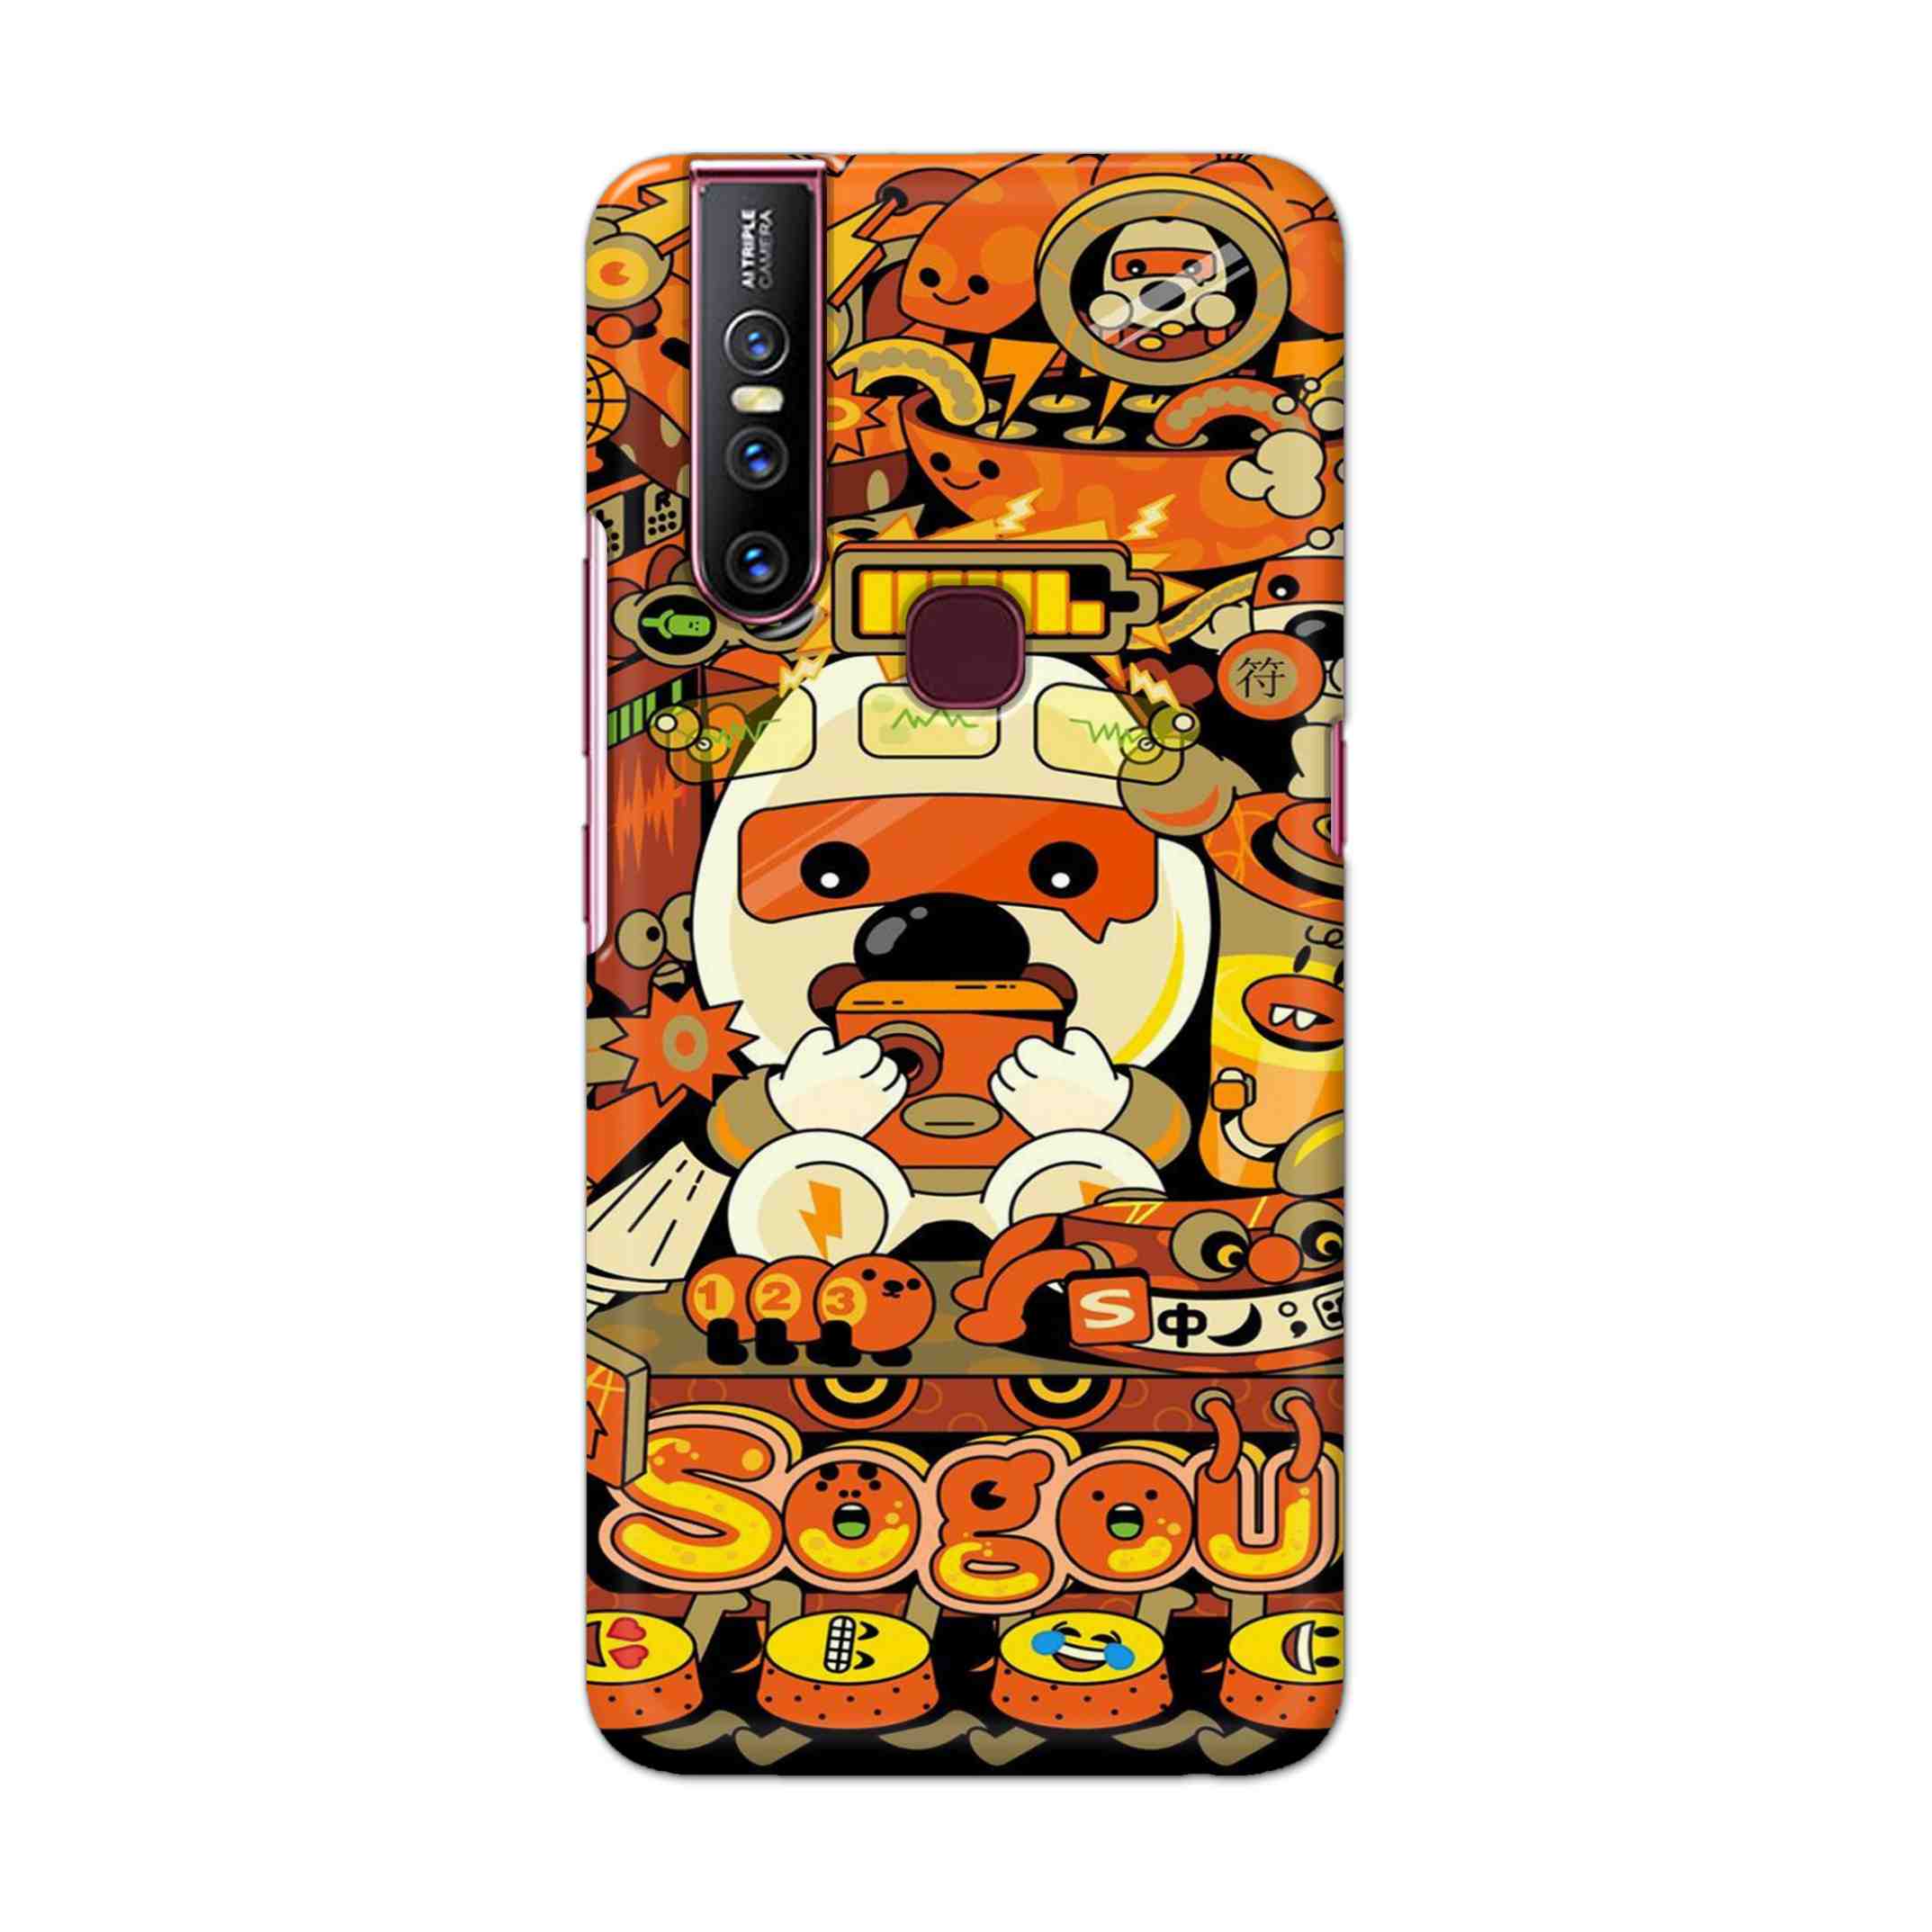 Buy Sogou Hard Back Mobile Phone Case Cover For Vivo V15 Online